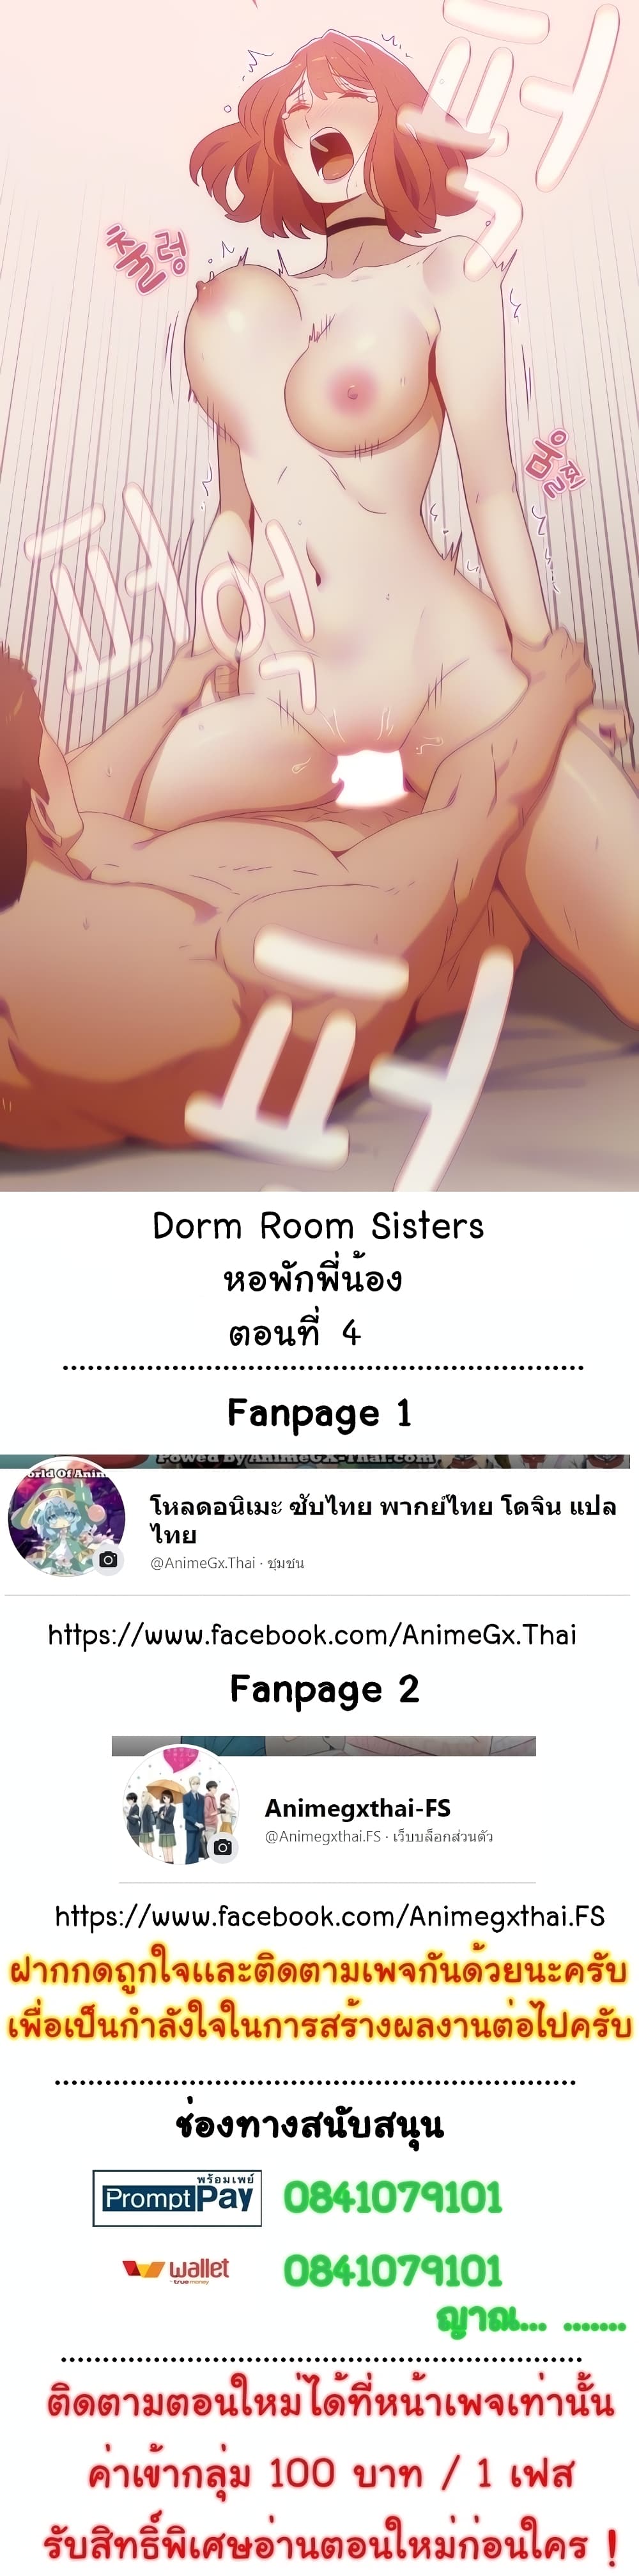 Dorm Room Sisters 4-4